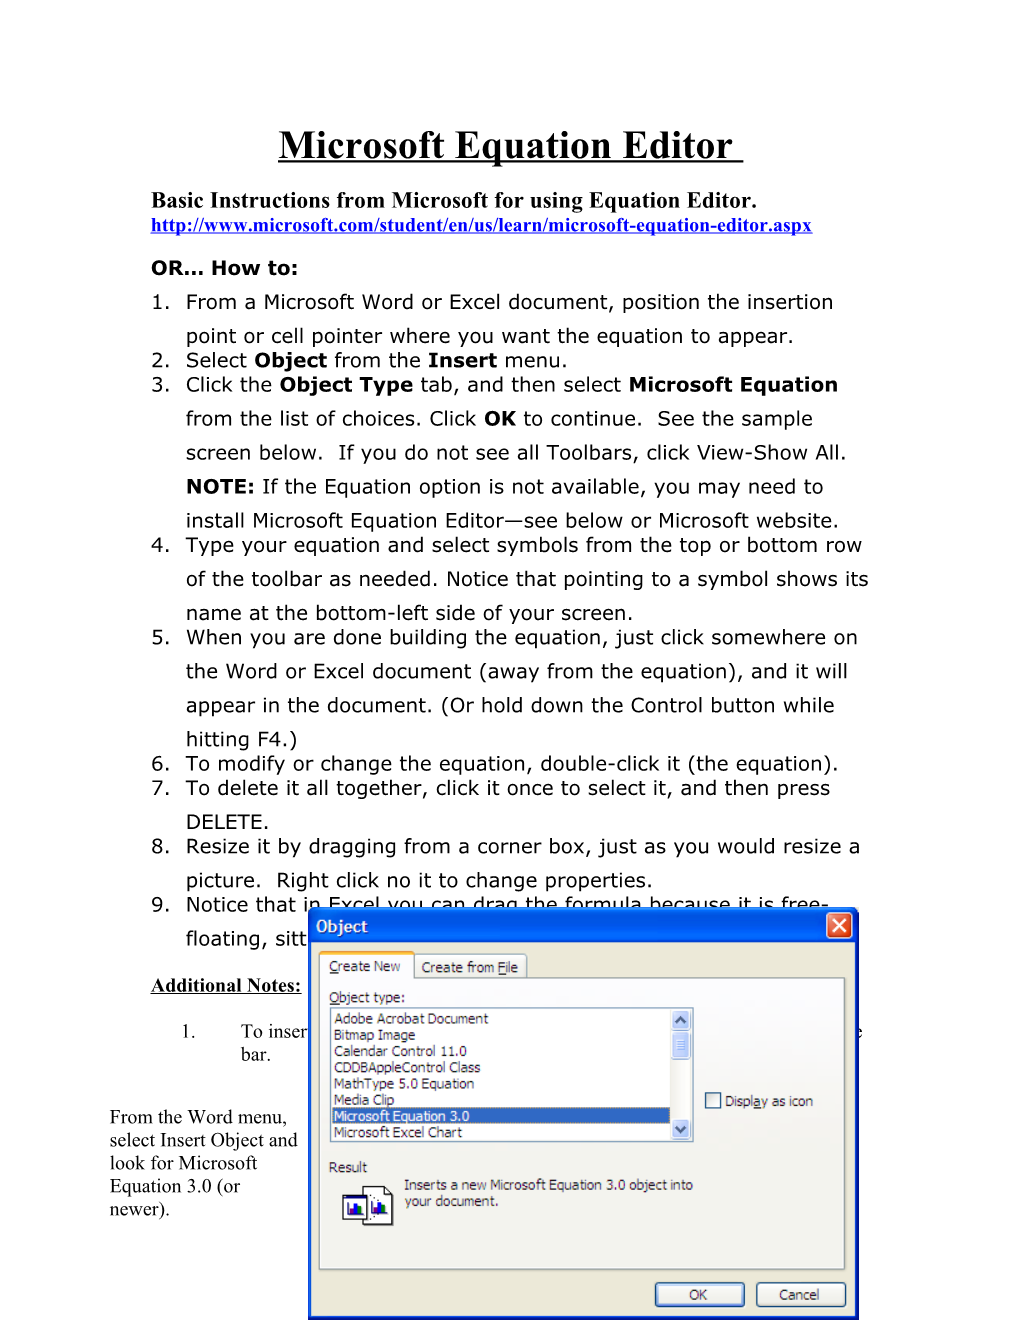 Microsoft Equation Editor 3